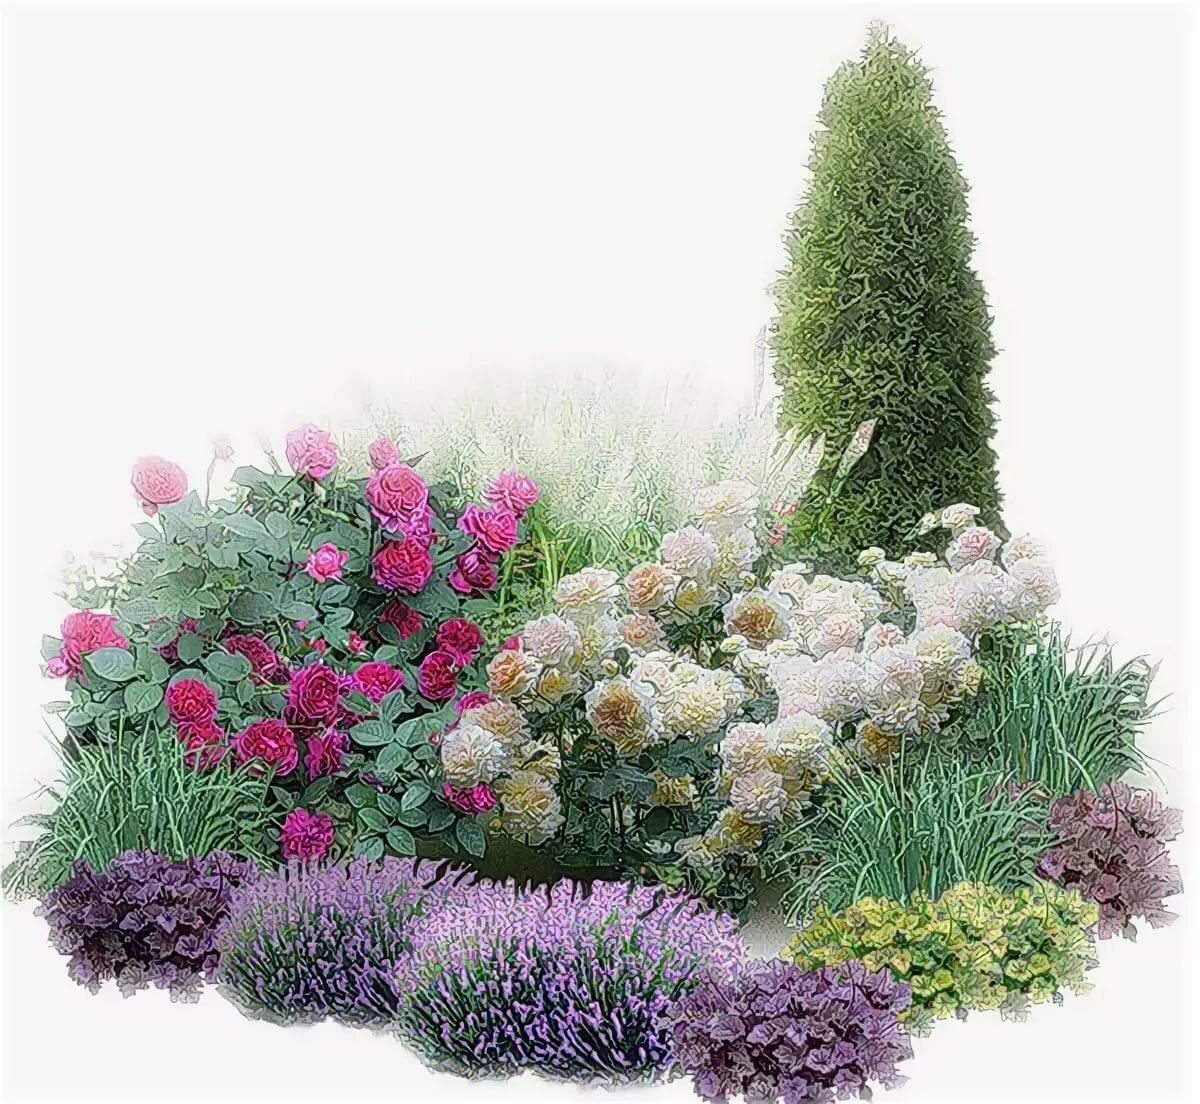 Клумба с цветами и кустарниками